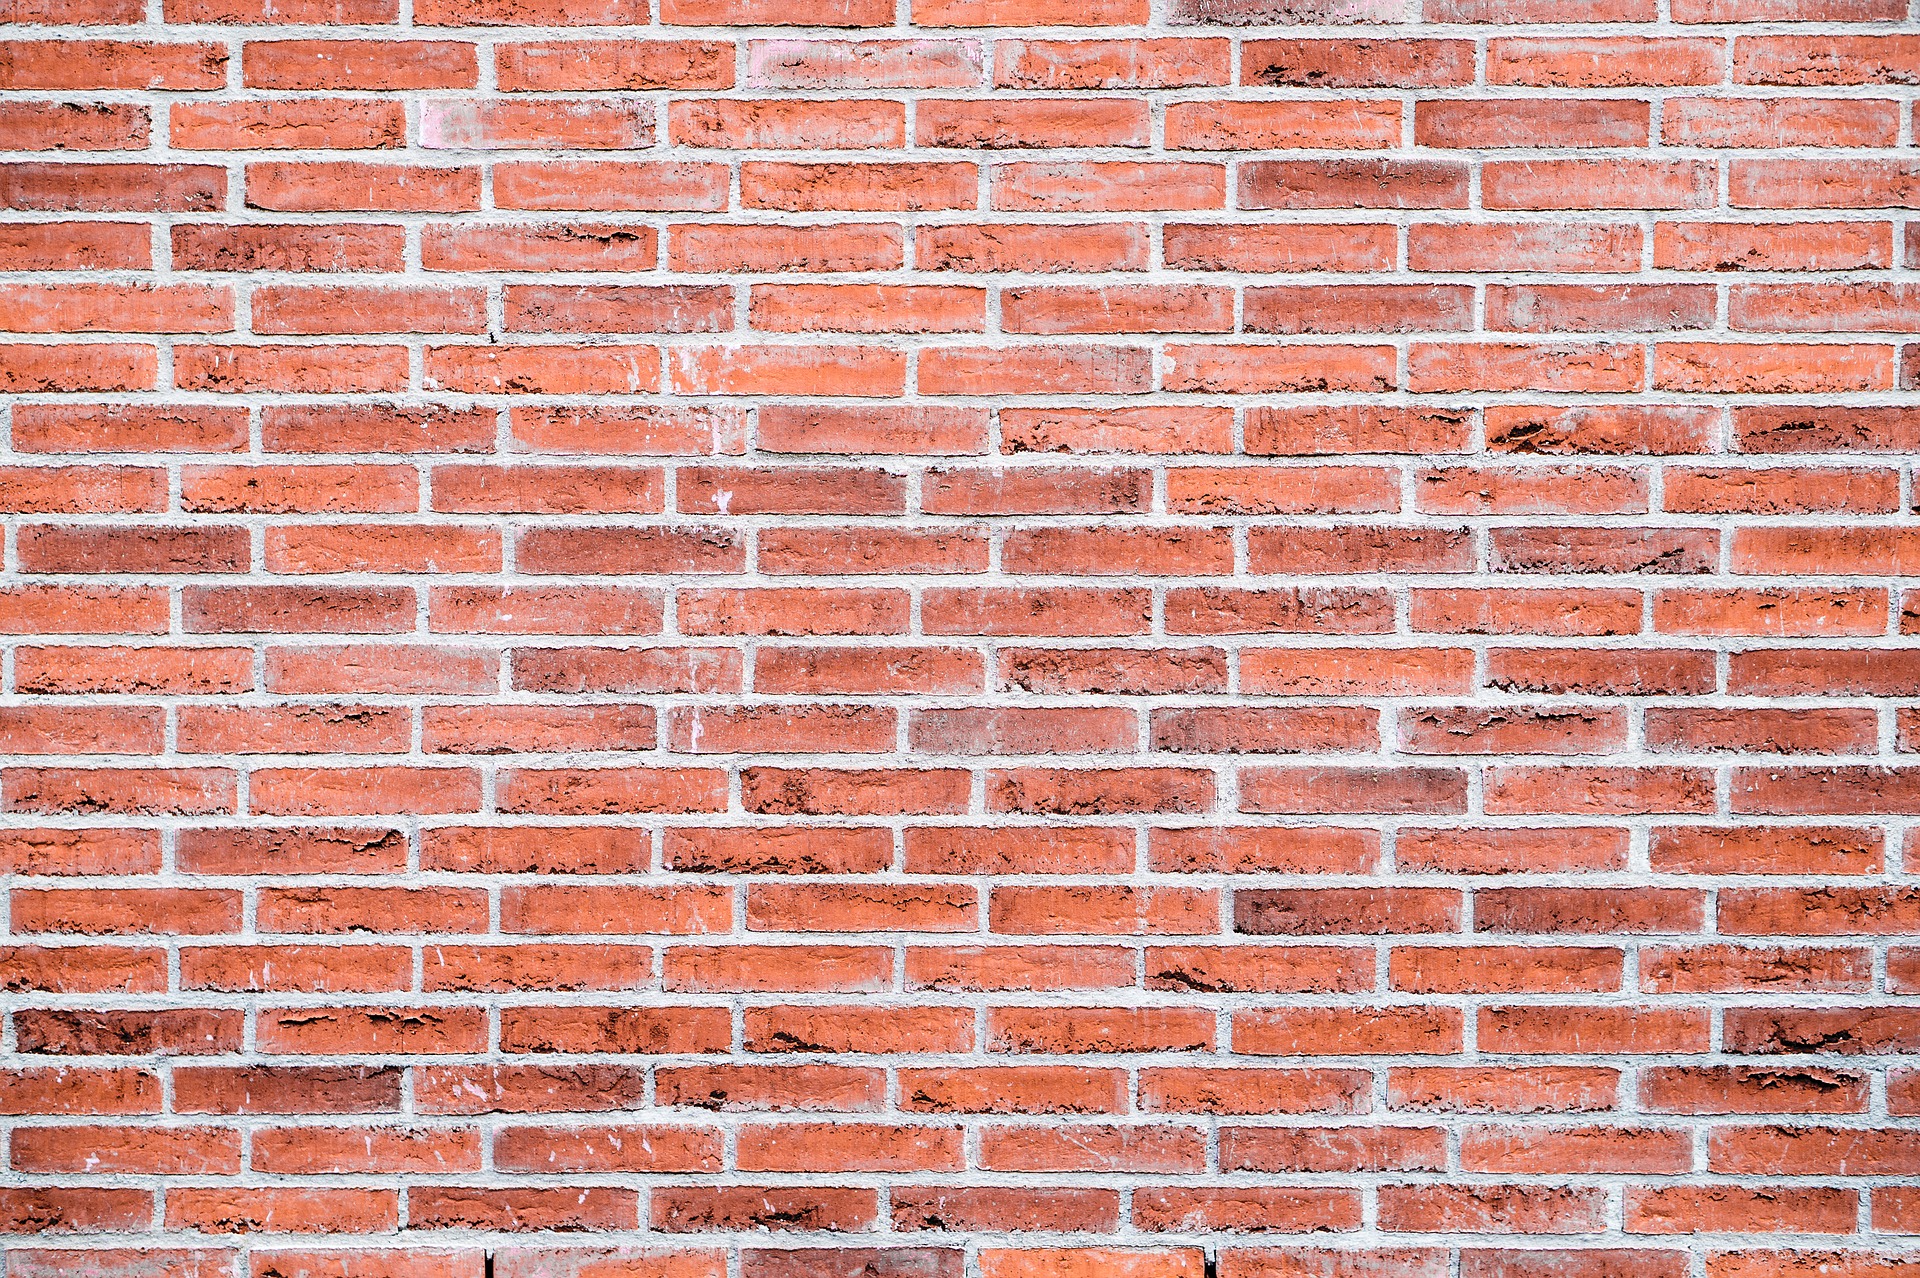 Brick Wall, Architecture, Block, Brick, Construction, HQ Photo